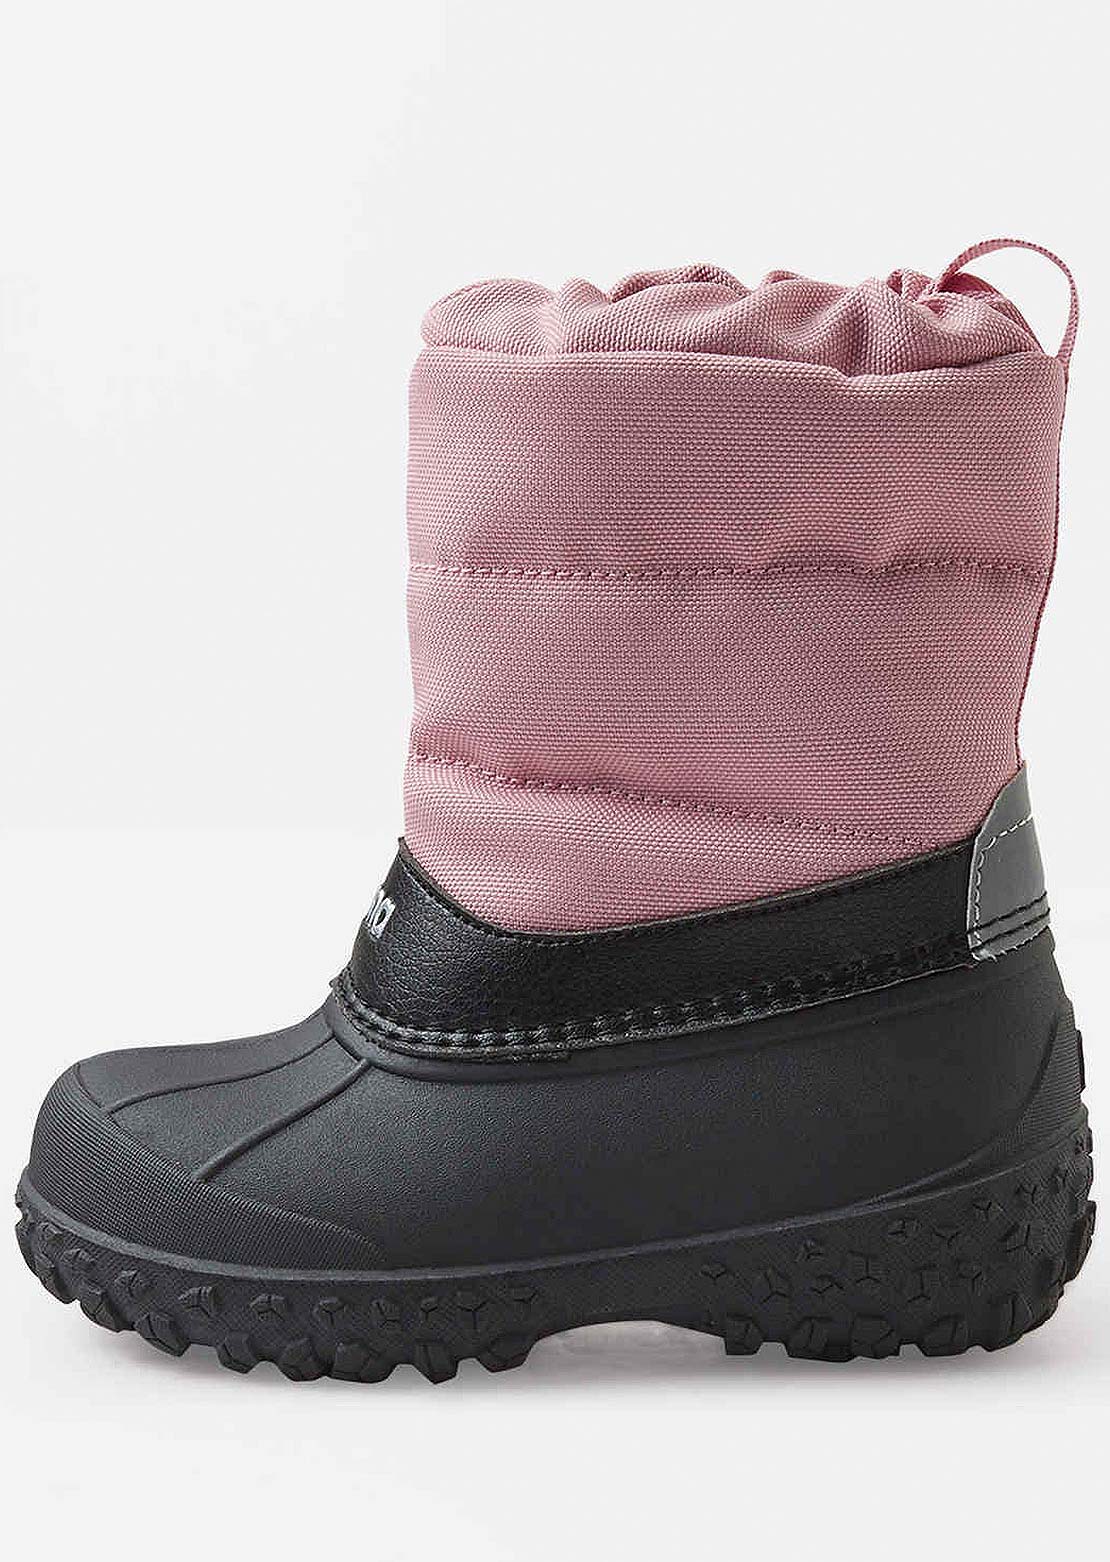 Reima Toddler Loskari Winter Boots Grey Pink